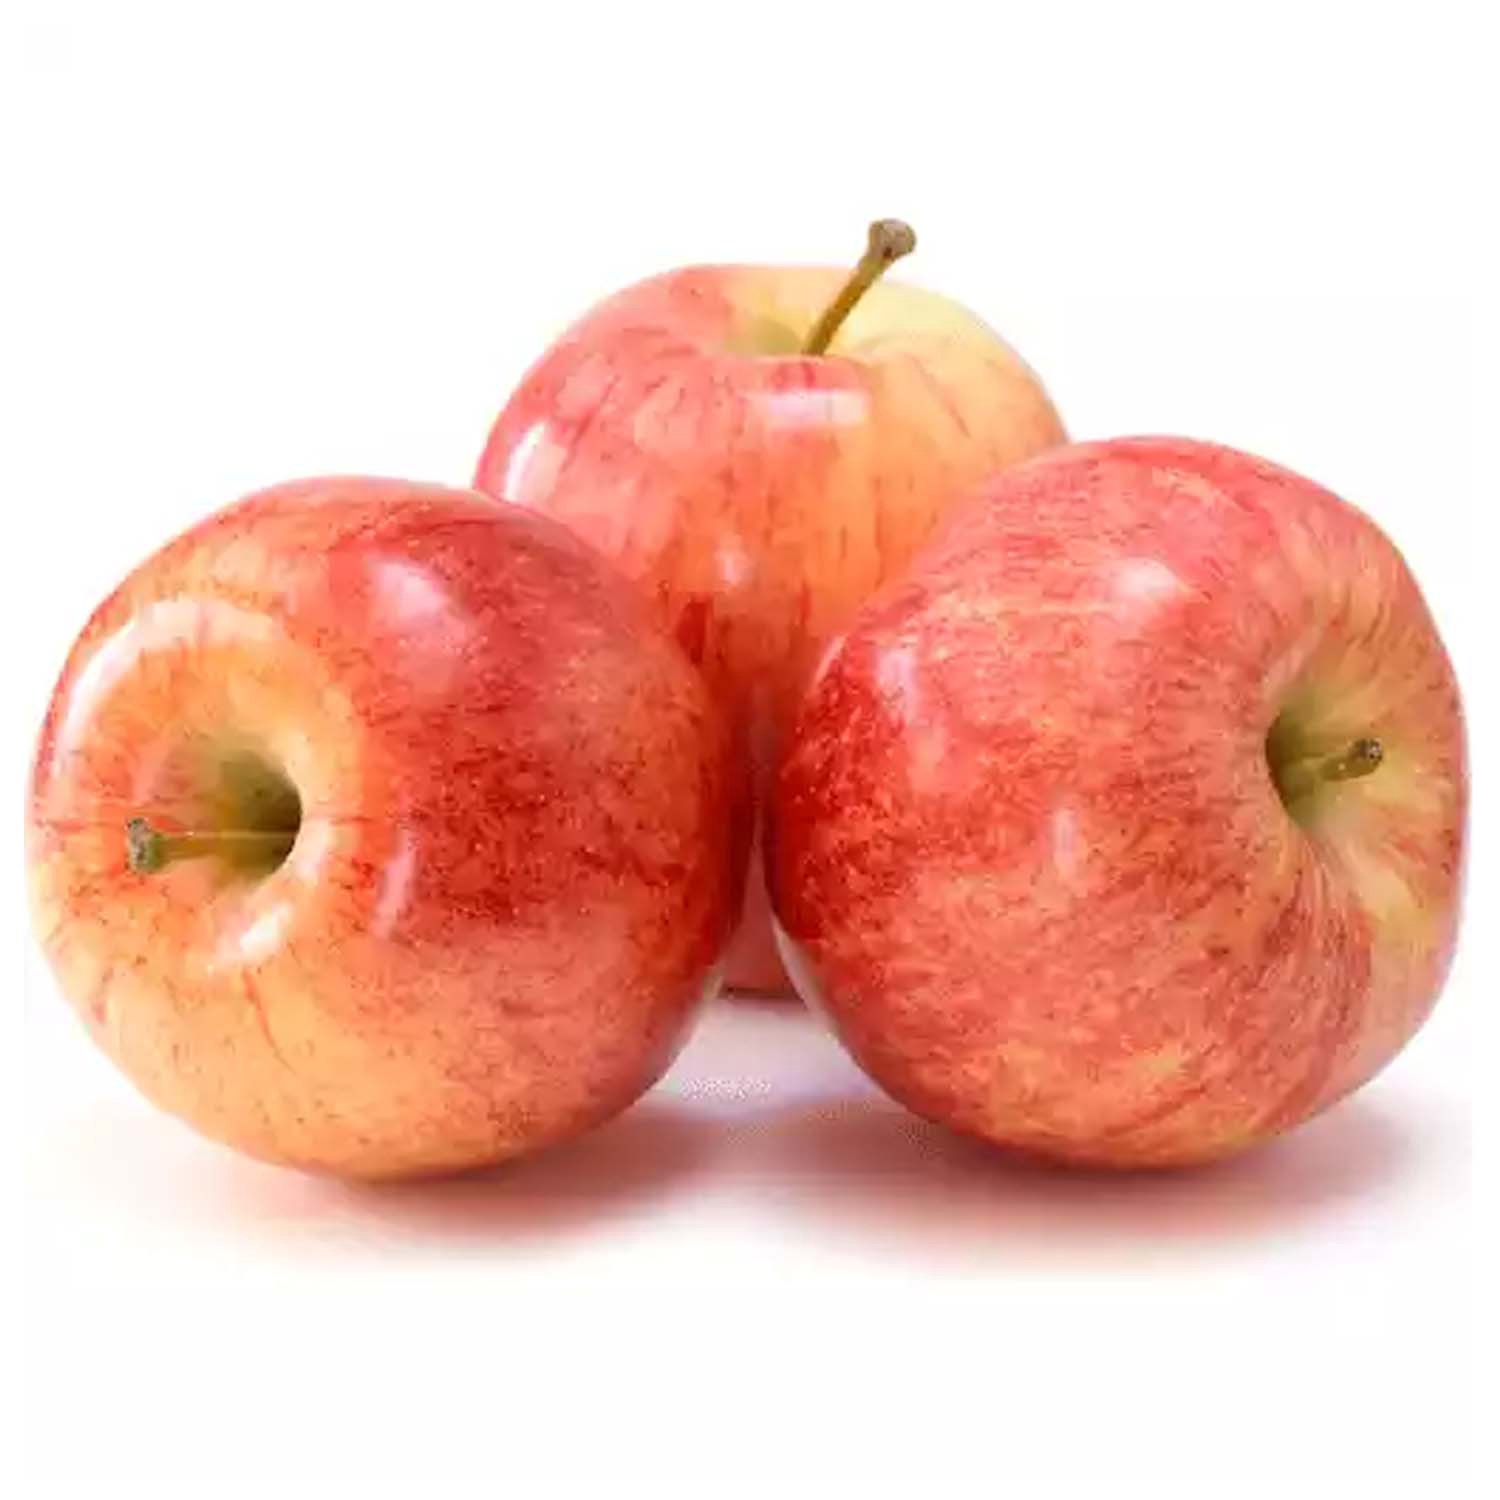 Fresh Apples Envy Bag, Apples